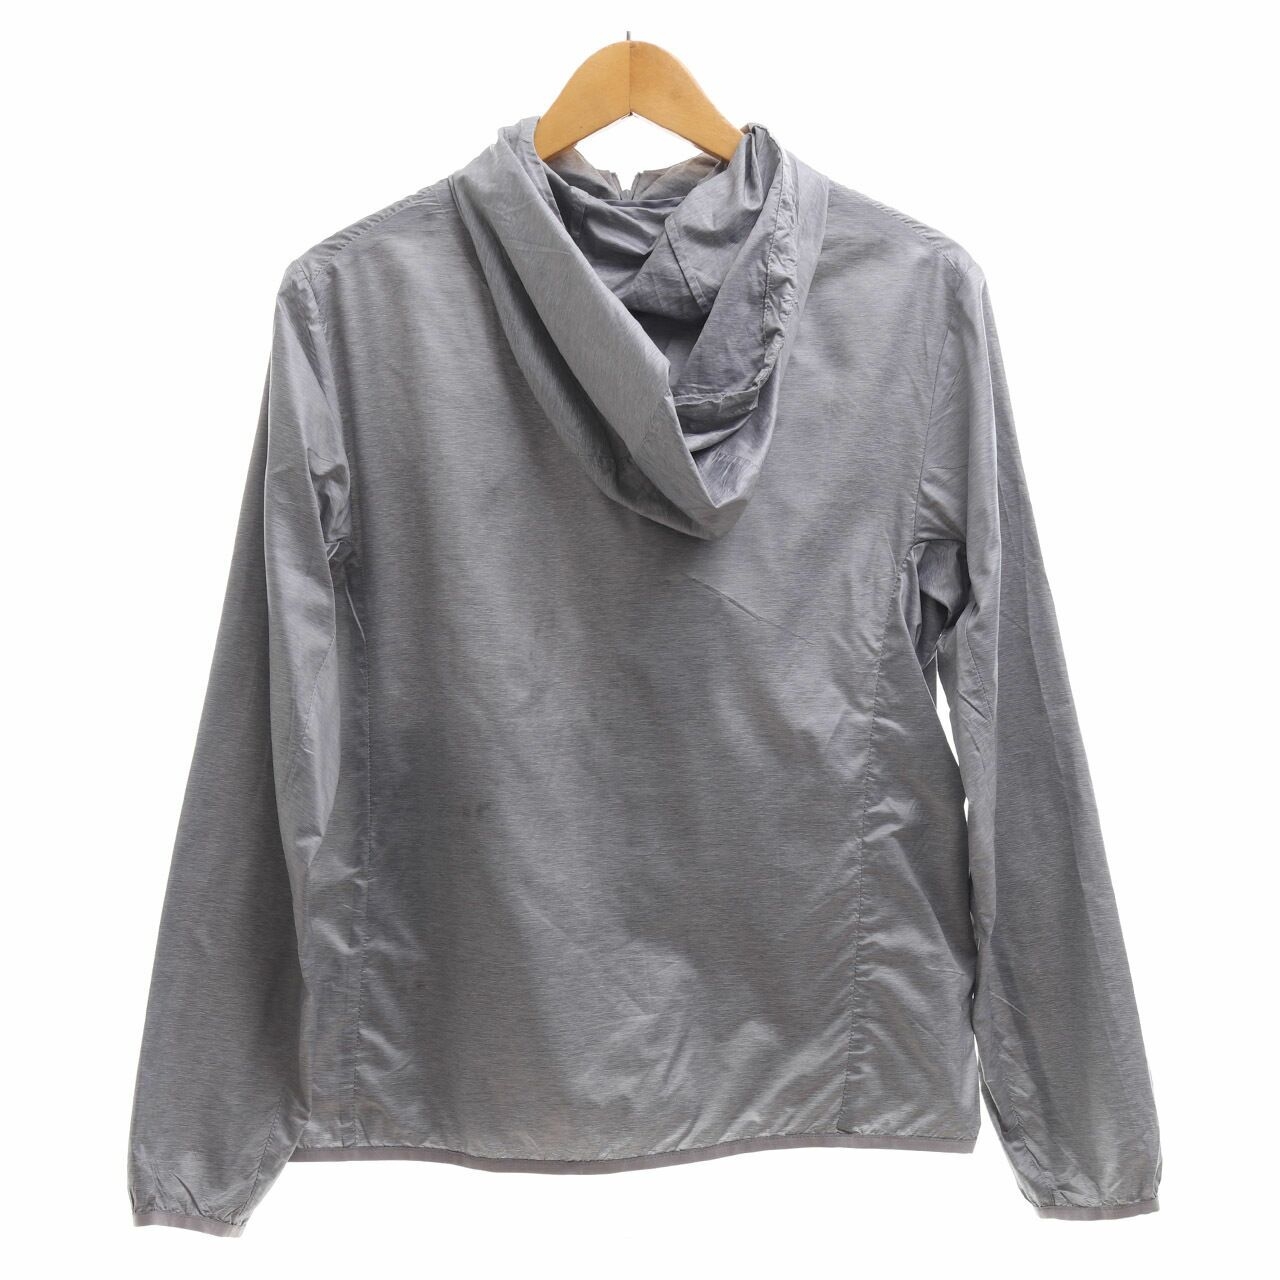 UNIQLO Grey Jacket